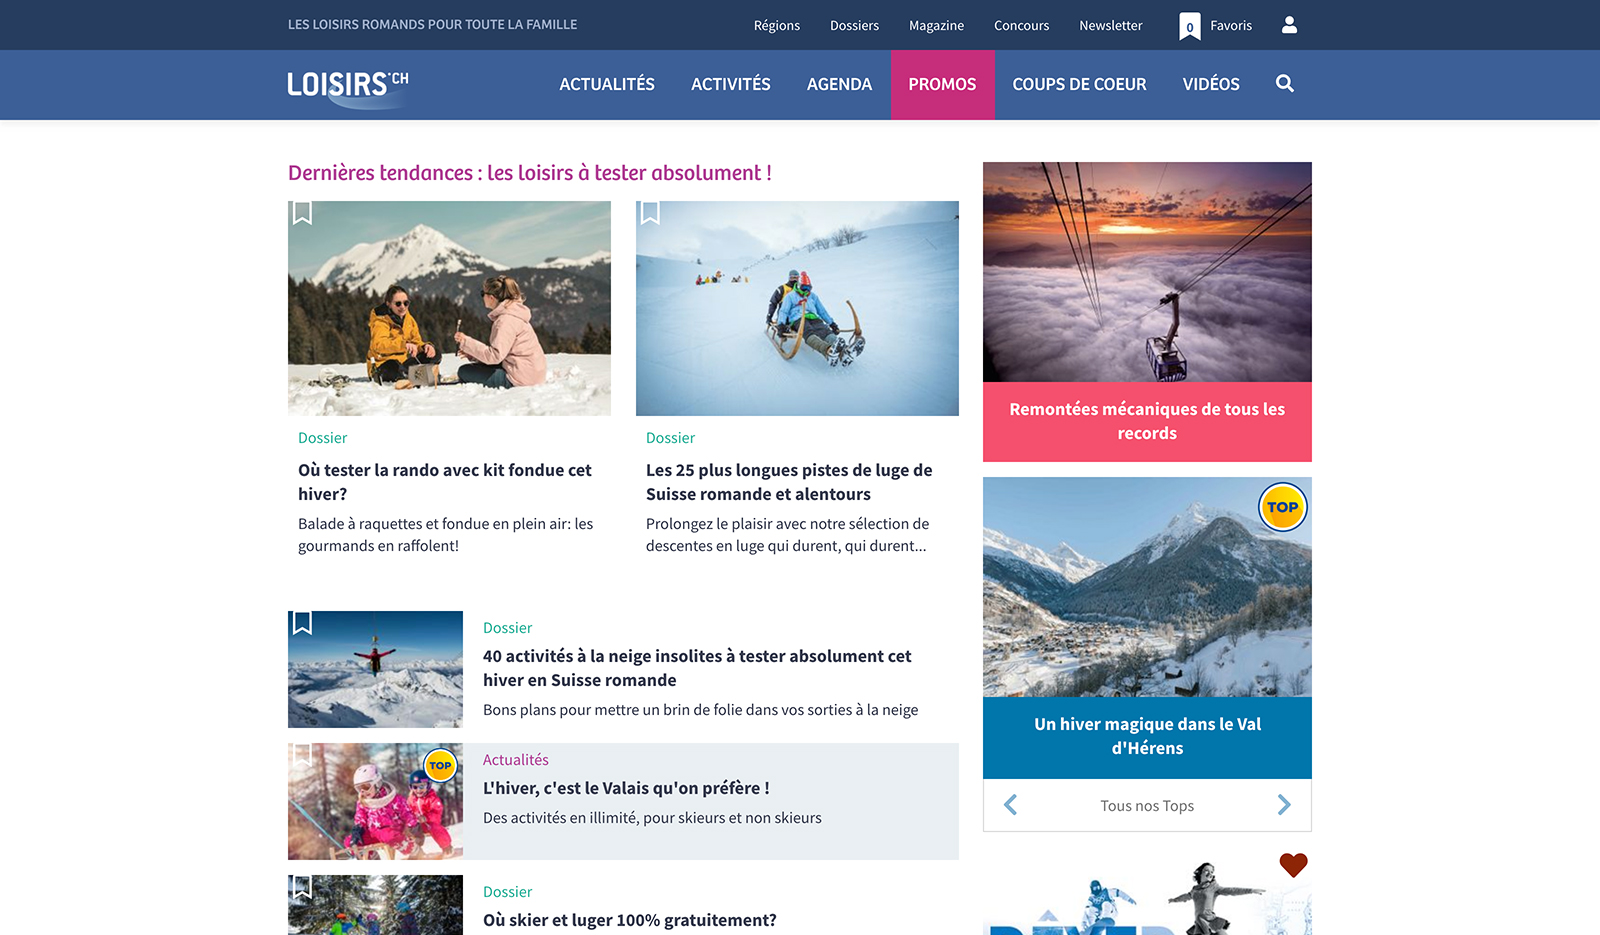 Loisirs.ch | GeneralMedia SA